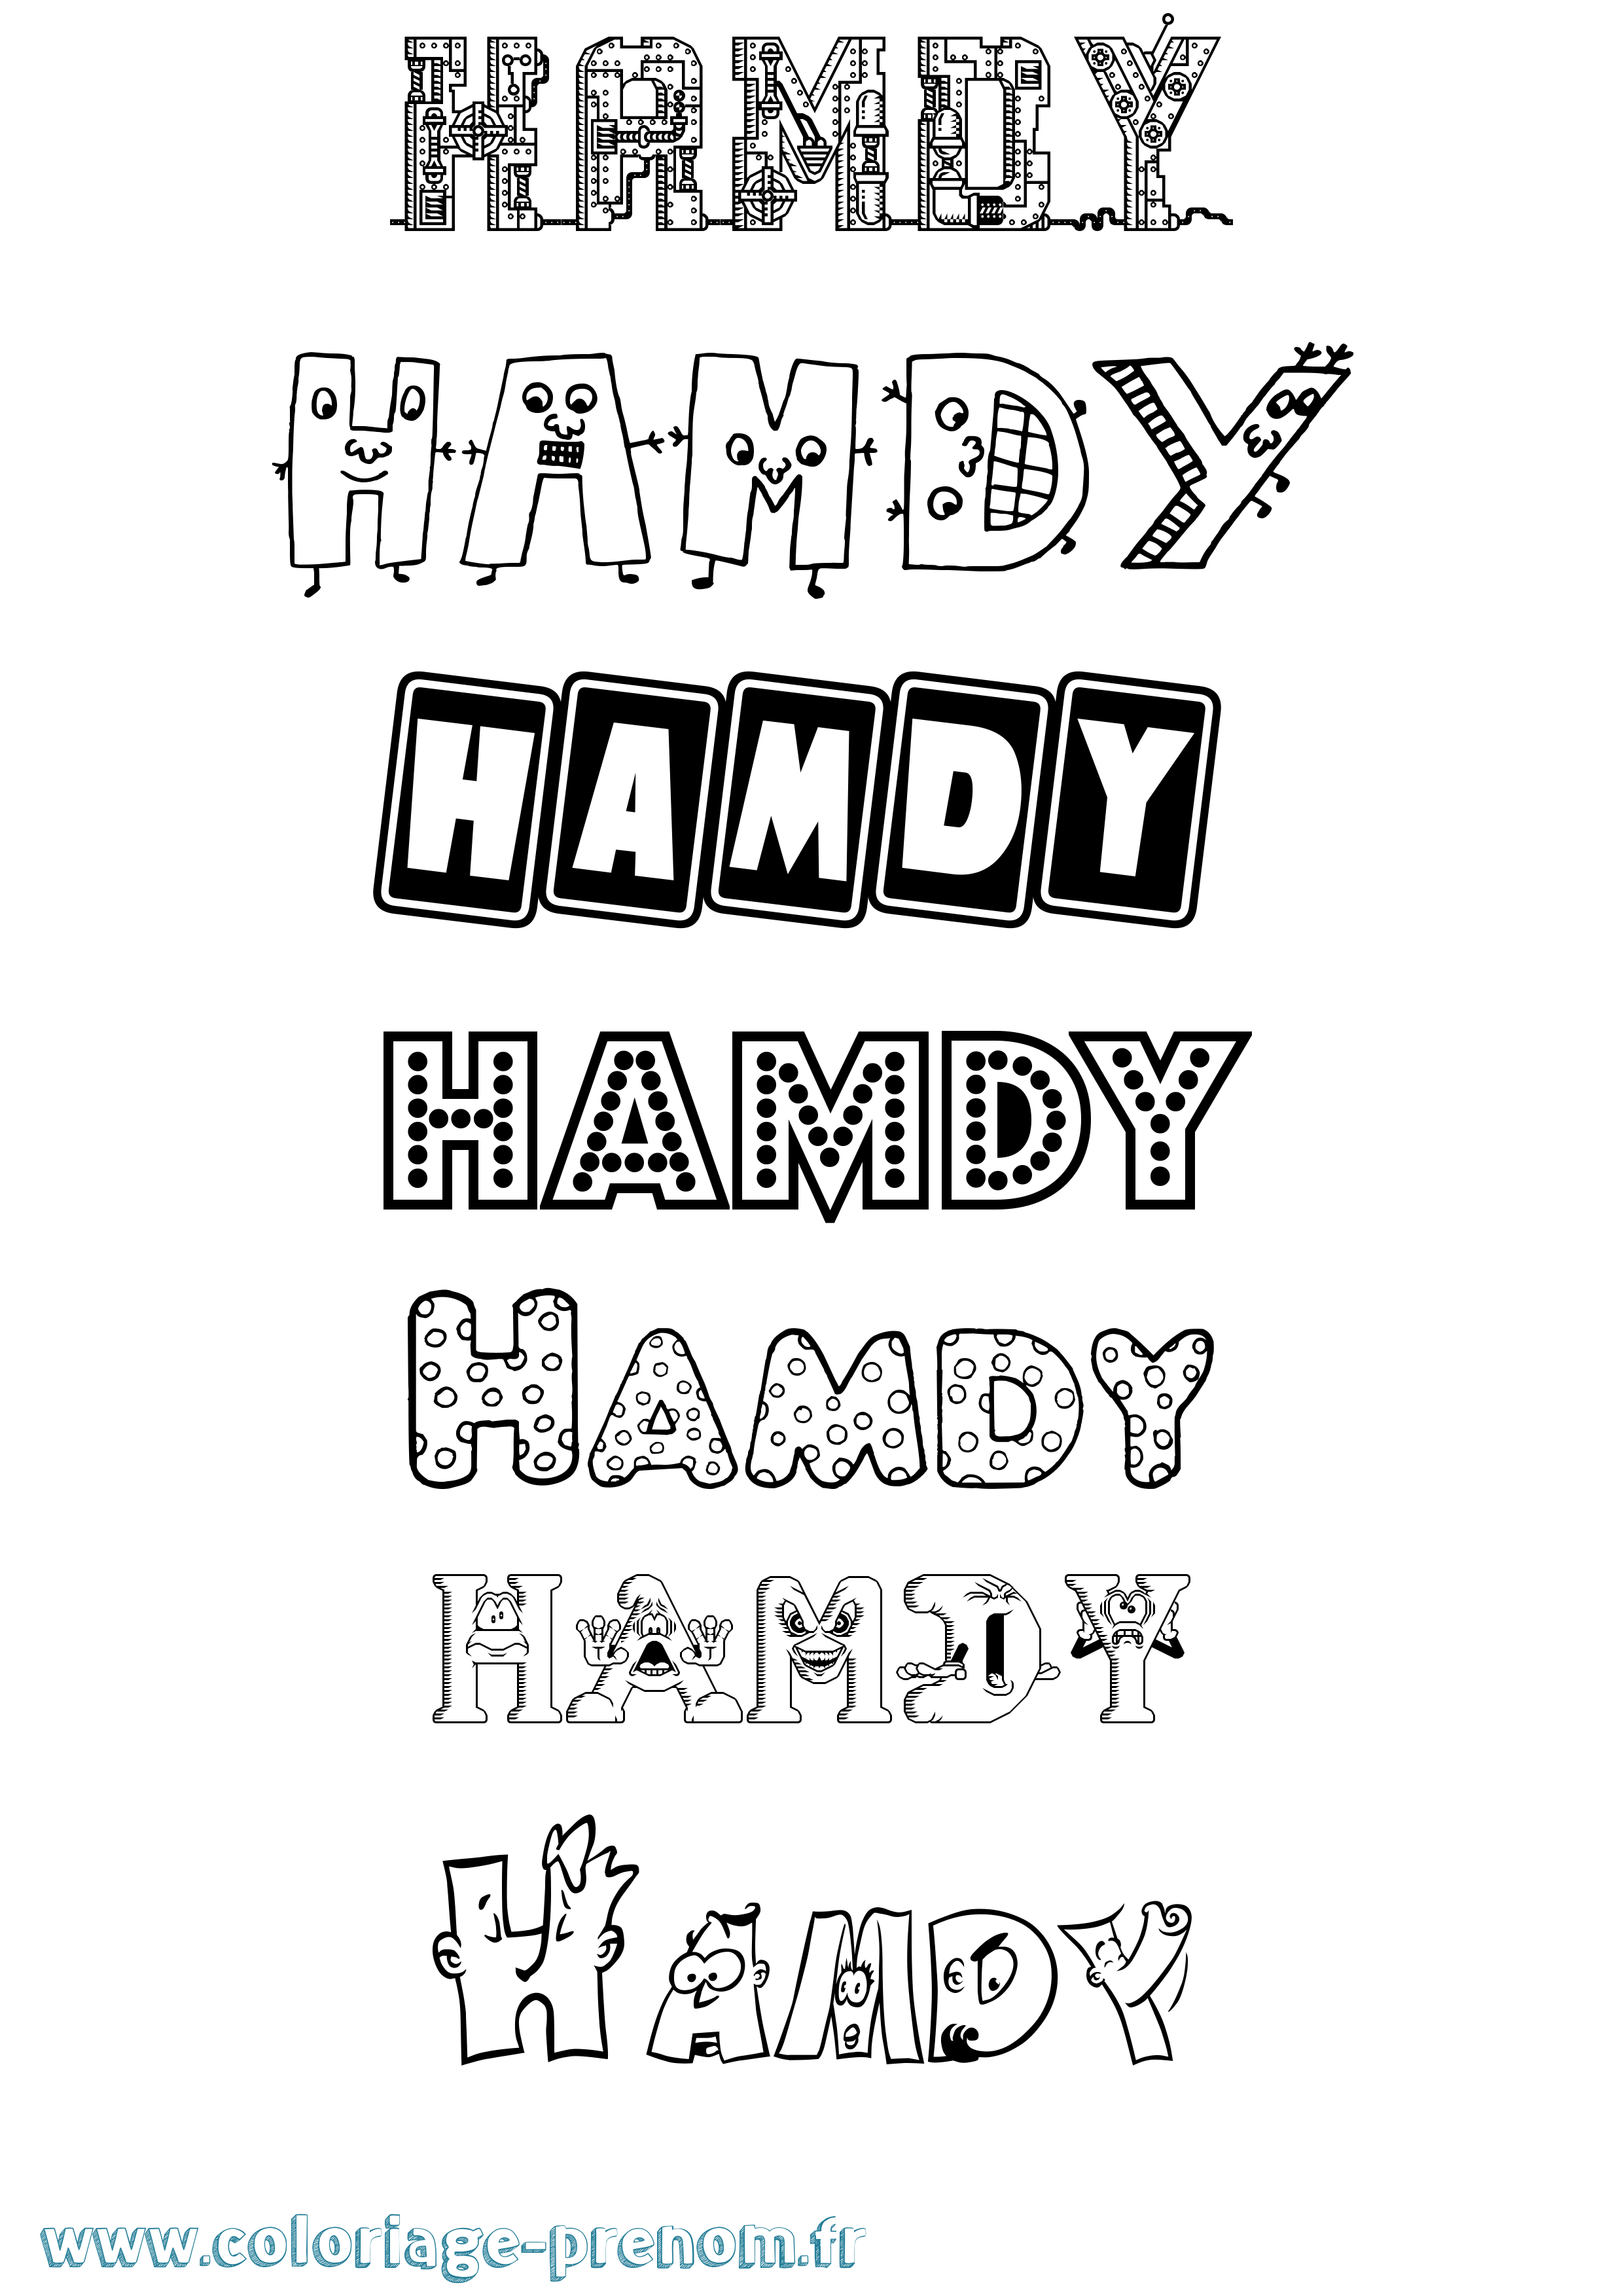 Coloriage prénom Hamdy Fun